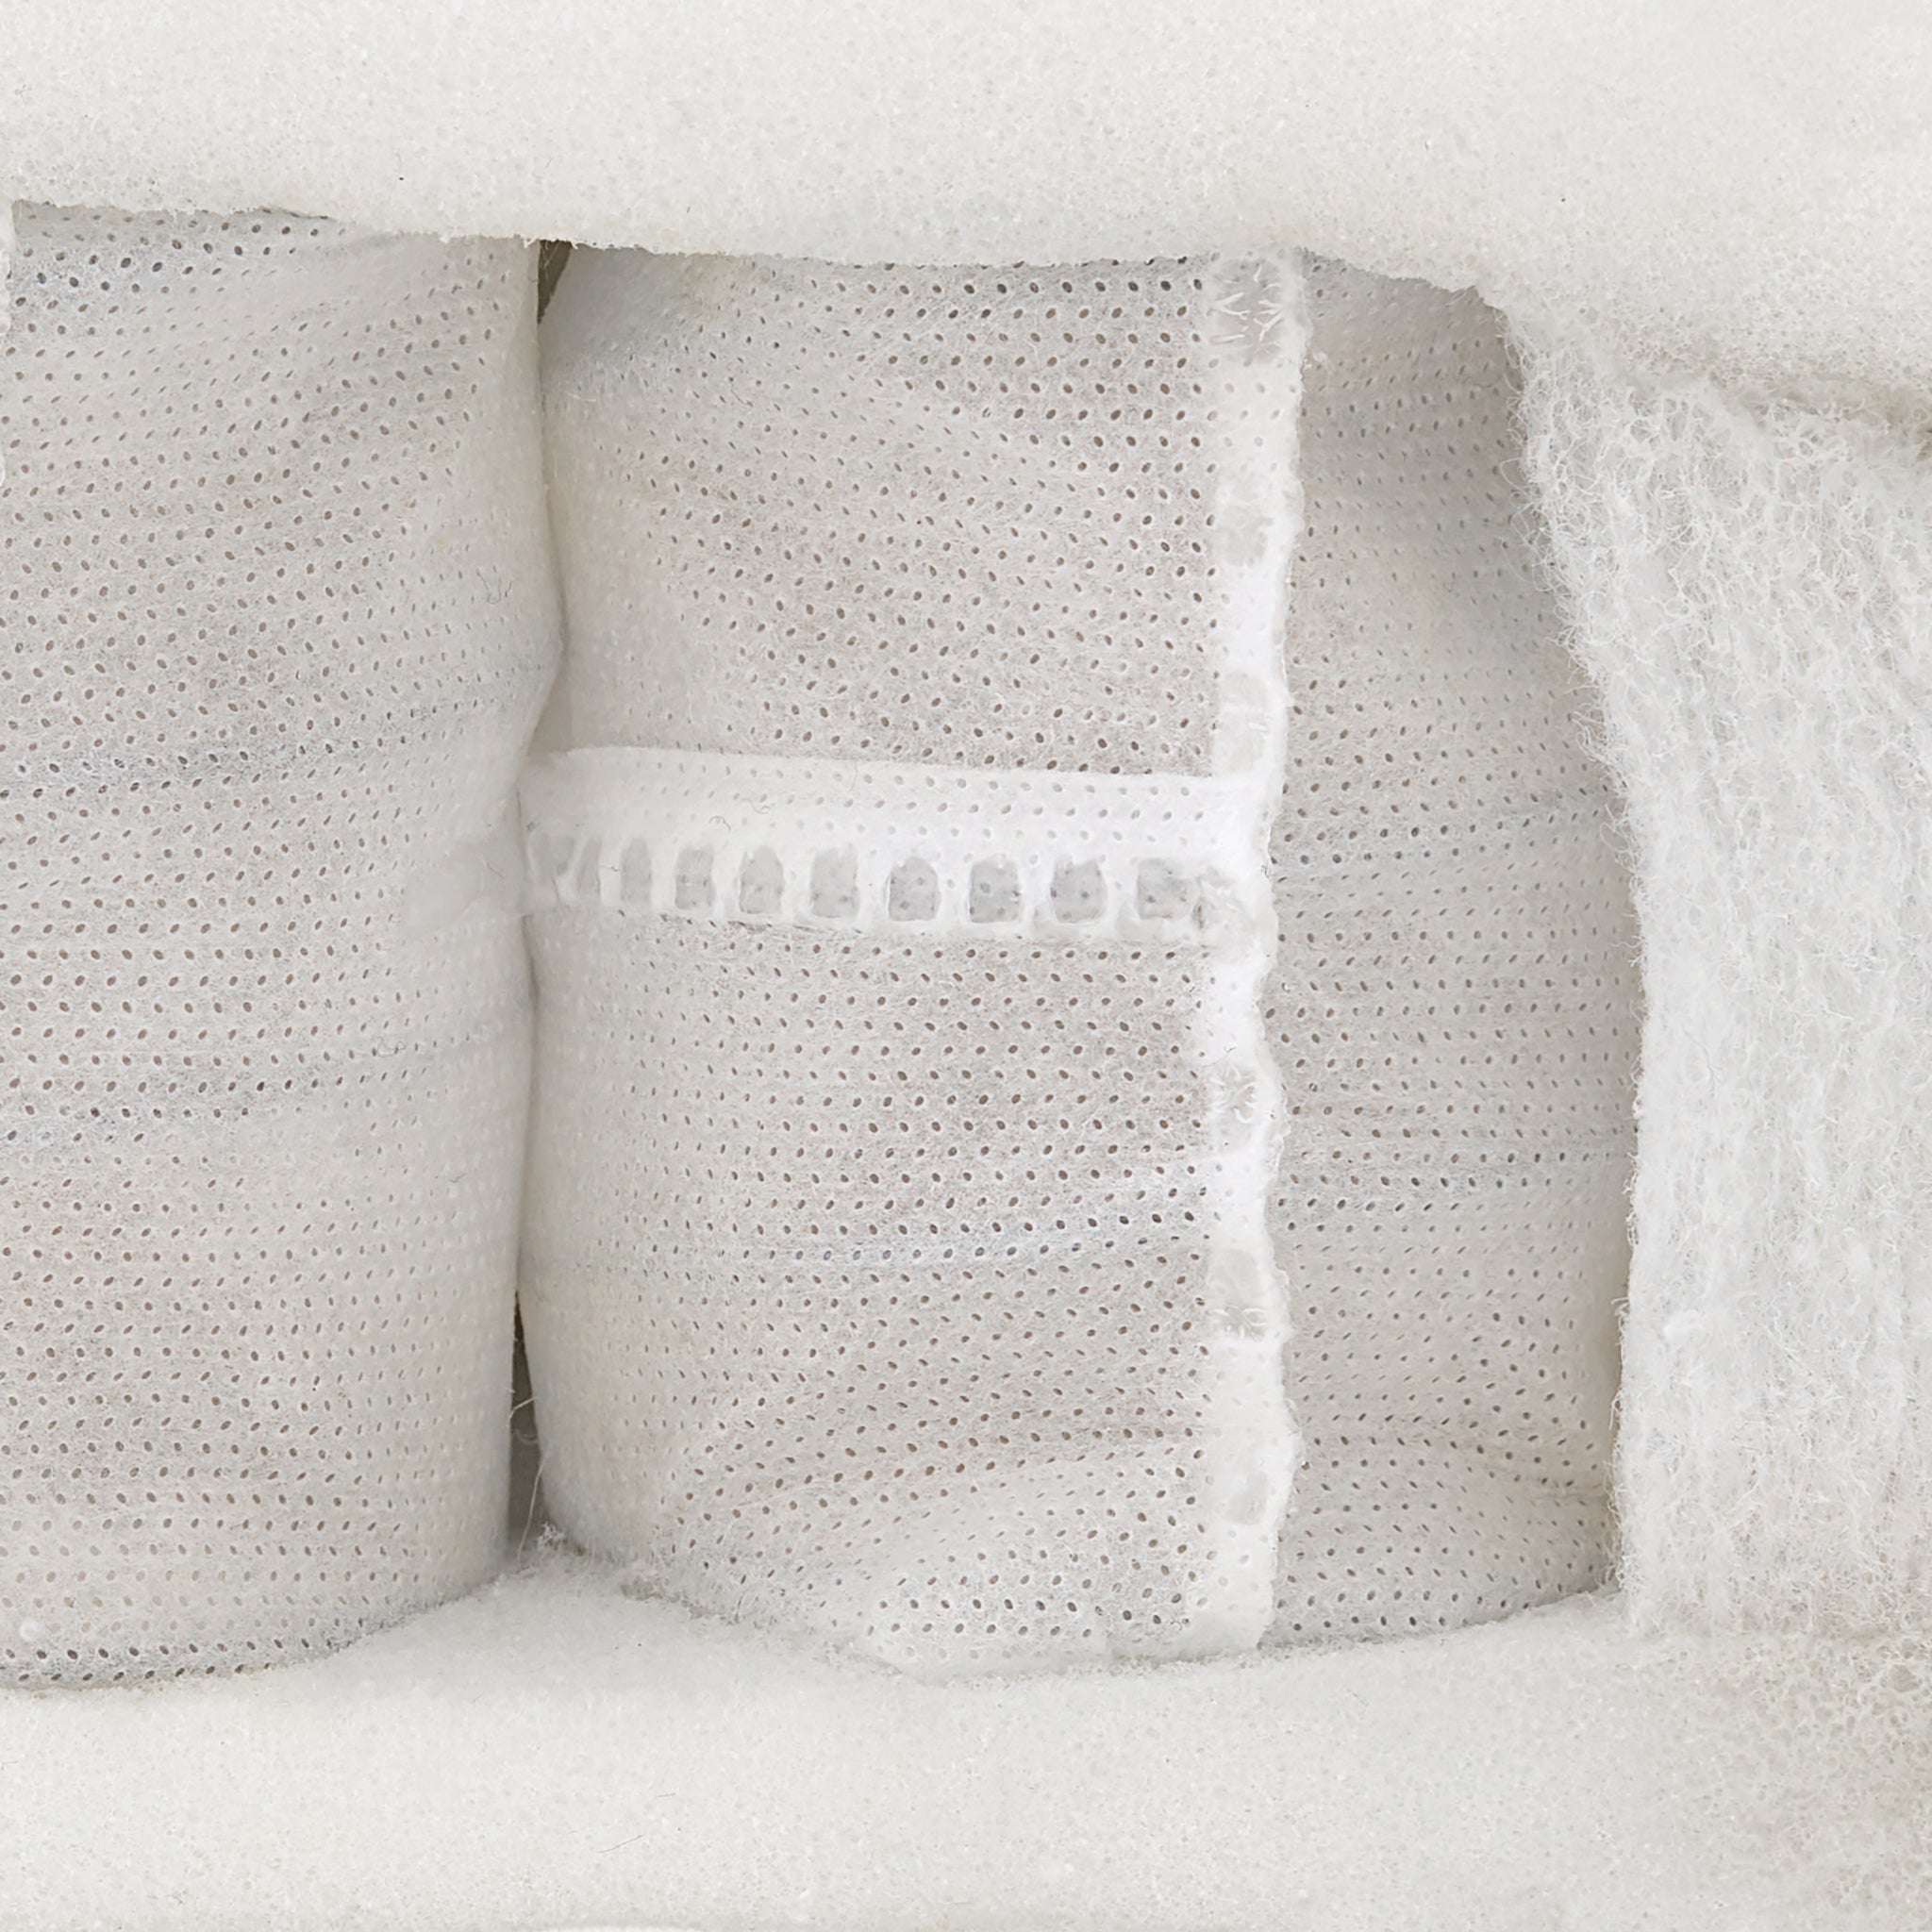 Tiny Dreamer Plus™ - Luxury Pocket Sprung Cot Mattress (160 x 90cm) - The Tiny Bed Company™